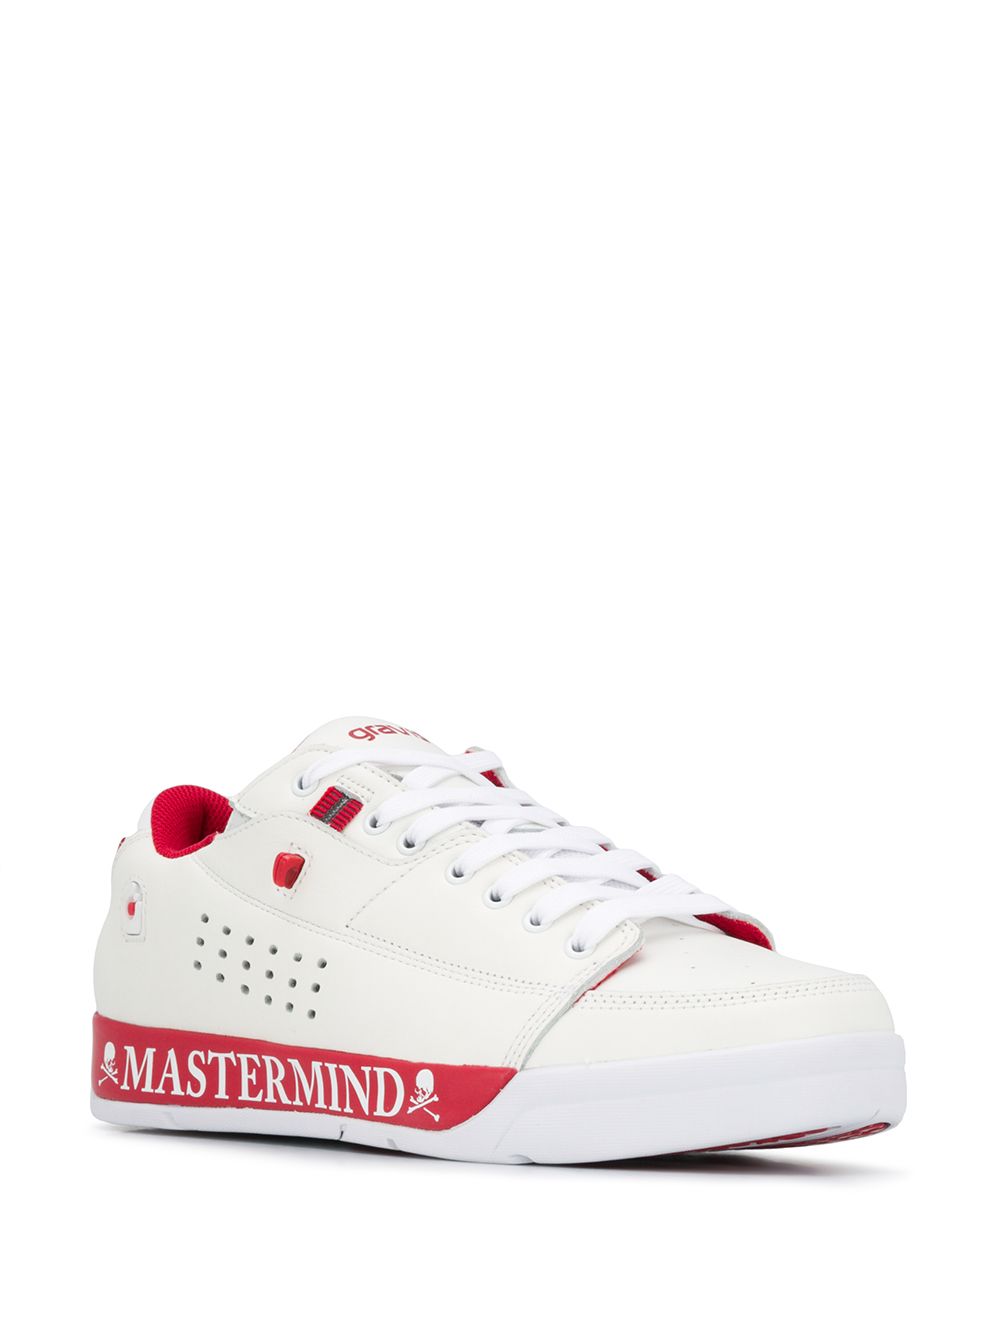 фото Mastermind japan кроссовки с логотипом